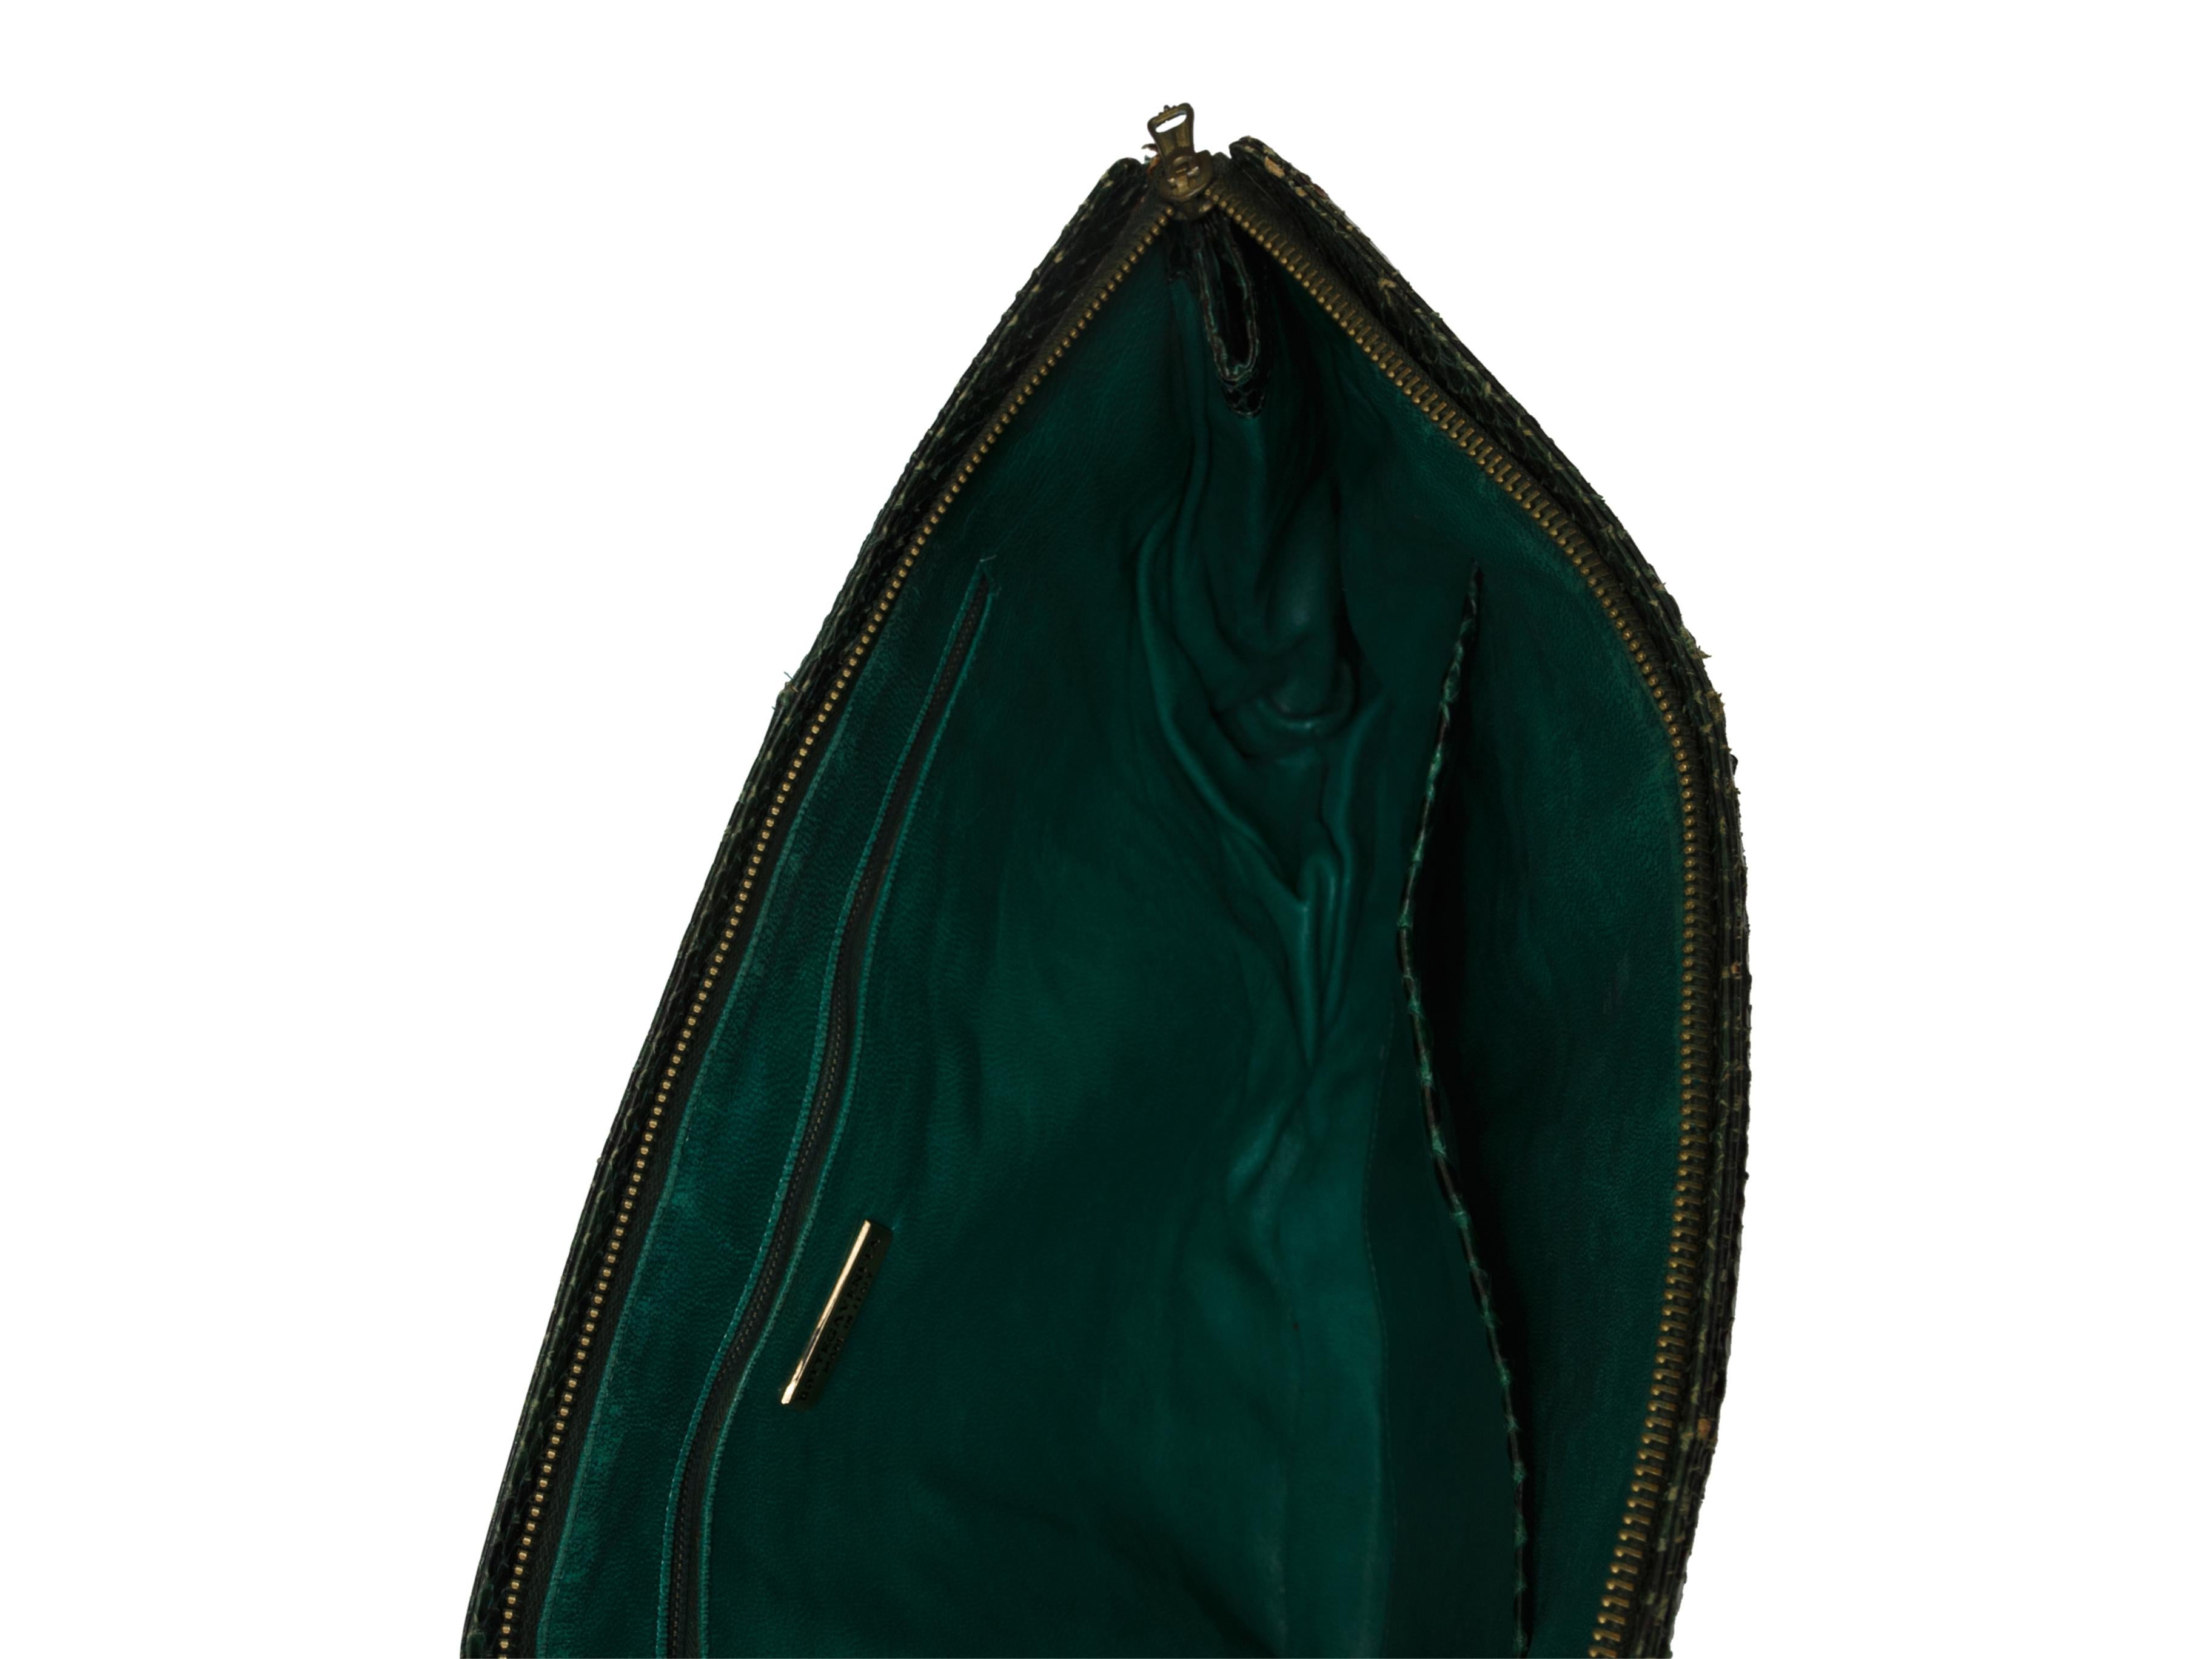 Product details: Dark green snakeskin clutch by Bottega Veneta. Interior pockets. Zip closure at top. 17